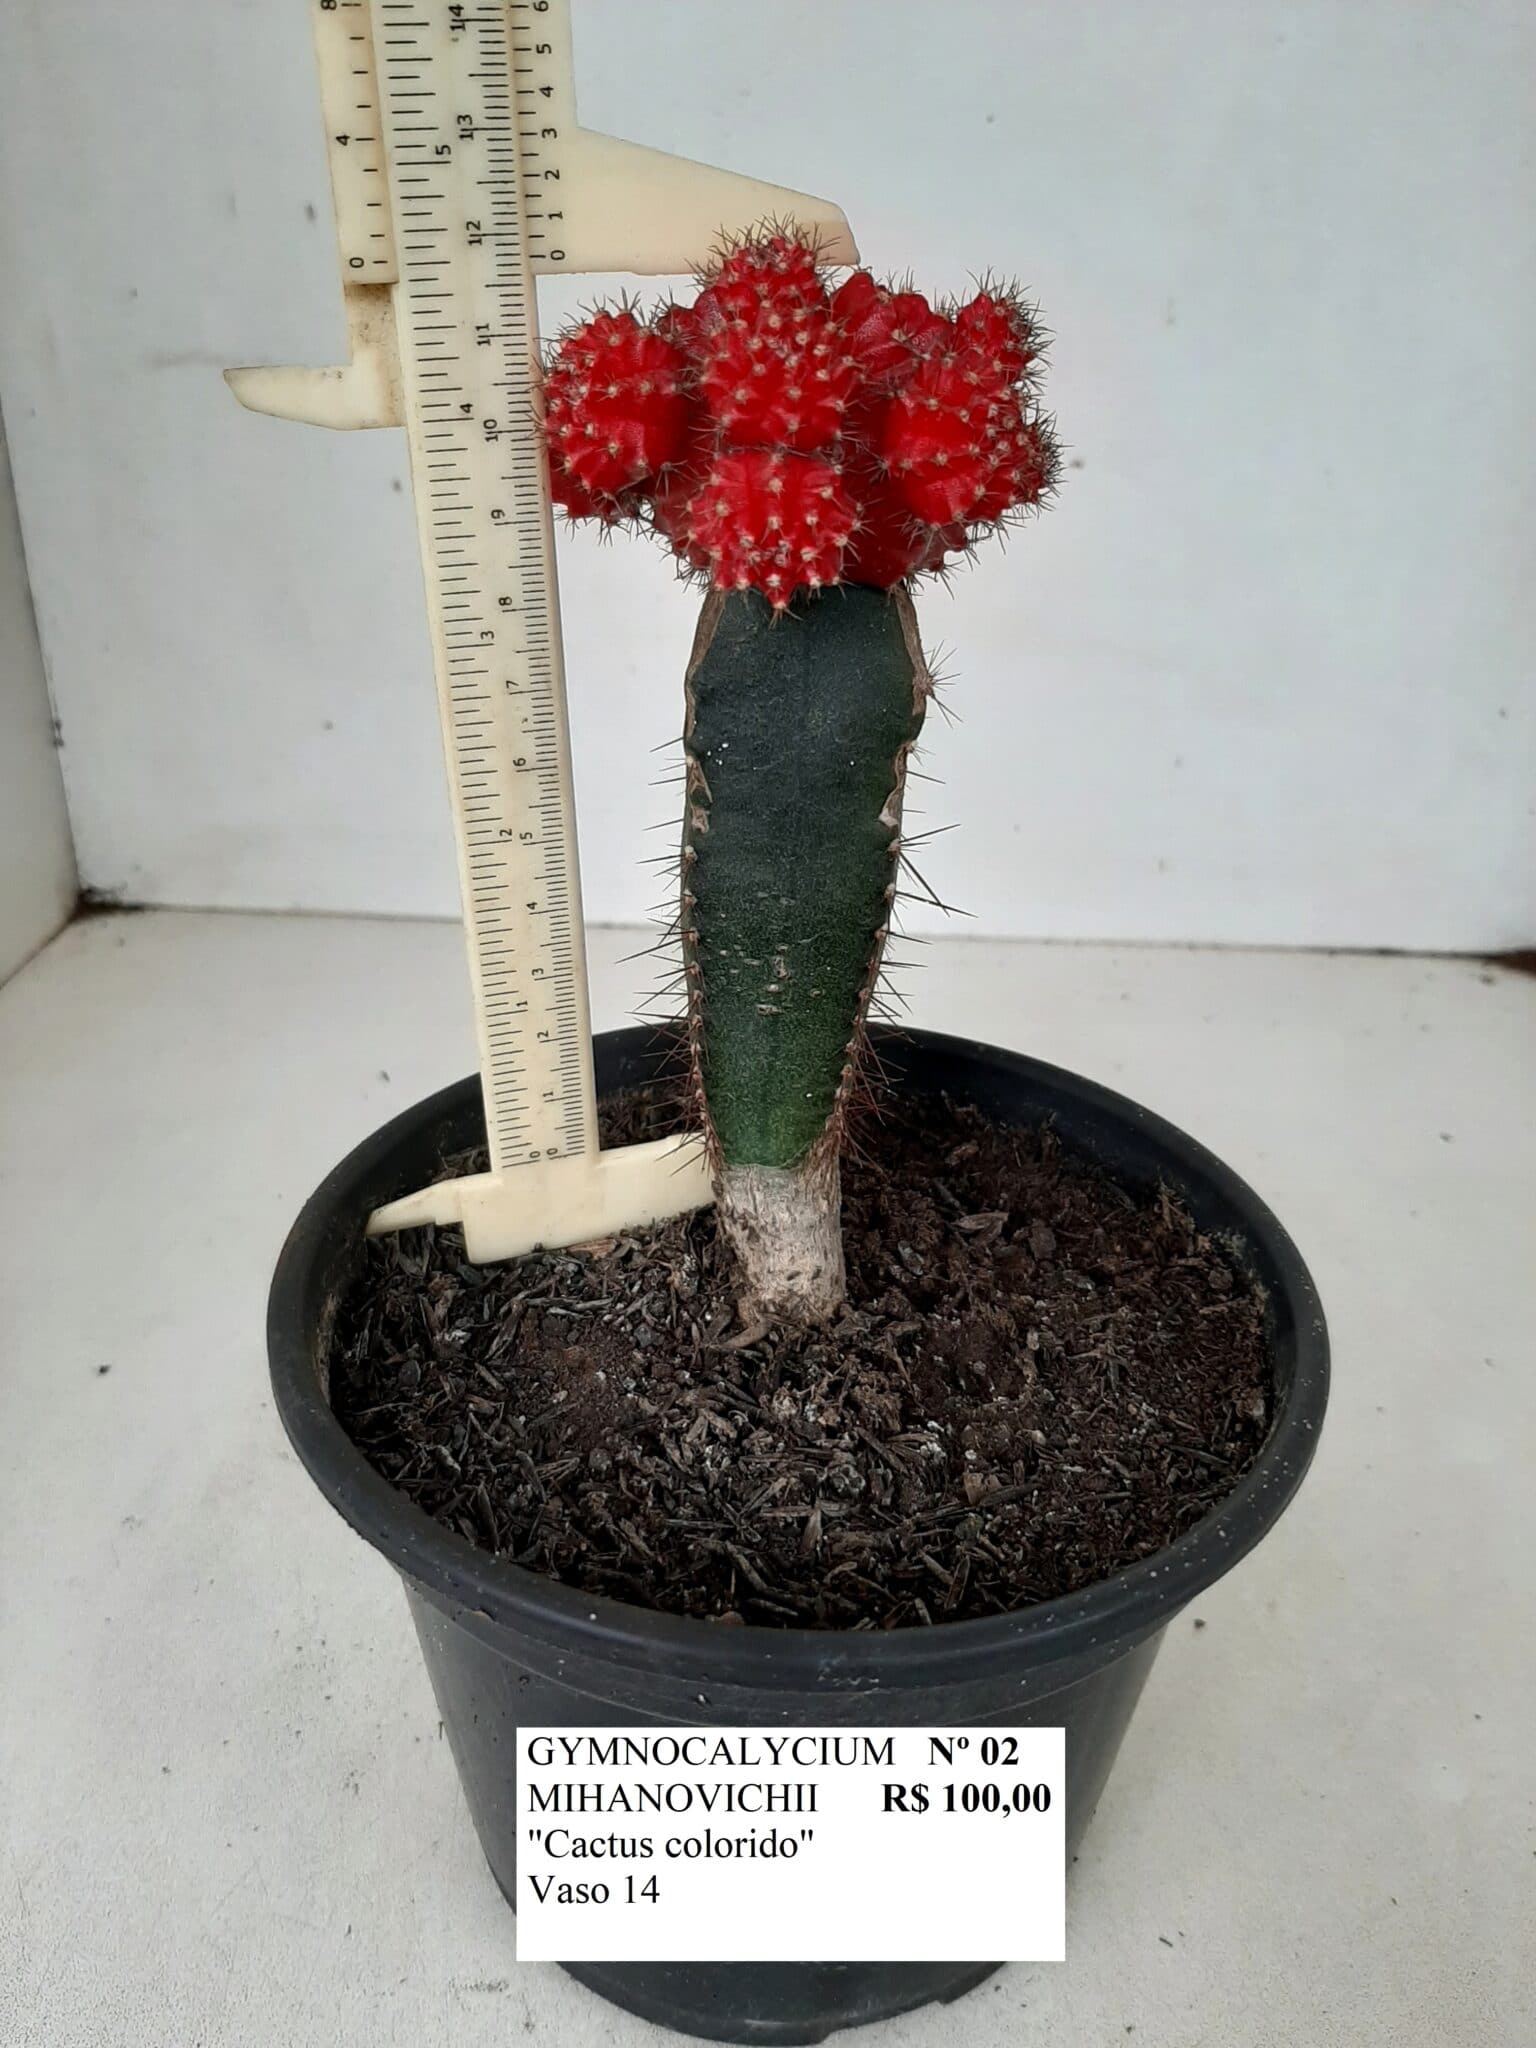 GYMNOCALYCIUM MIHANOVICHII Nº 02 “vermelha” – Cactos colorido – Vaso 14 –  Adenium Rosa do Deserto – Luis Michelon